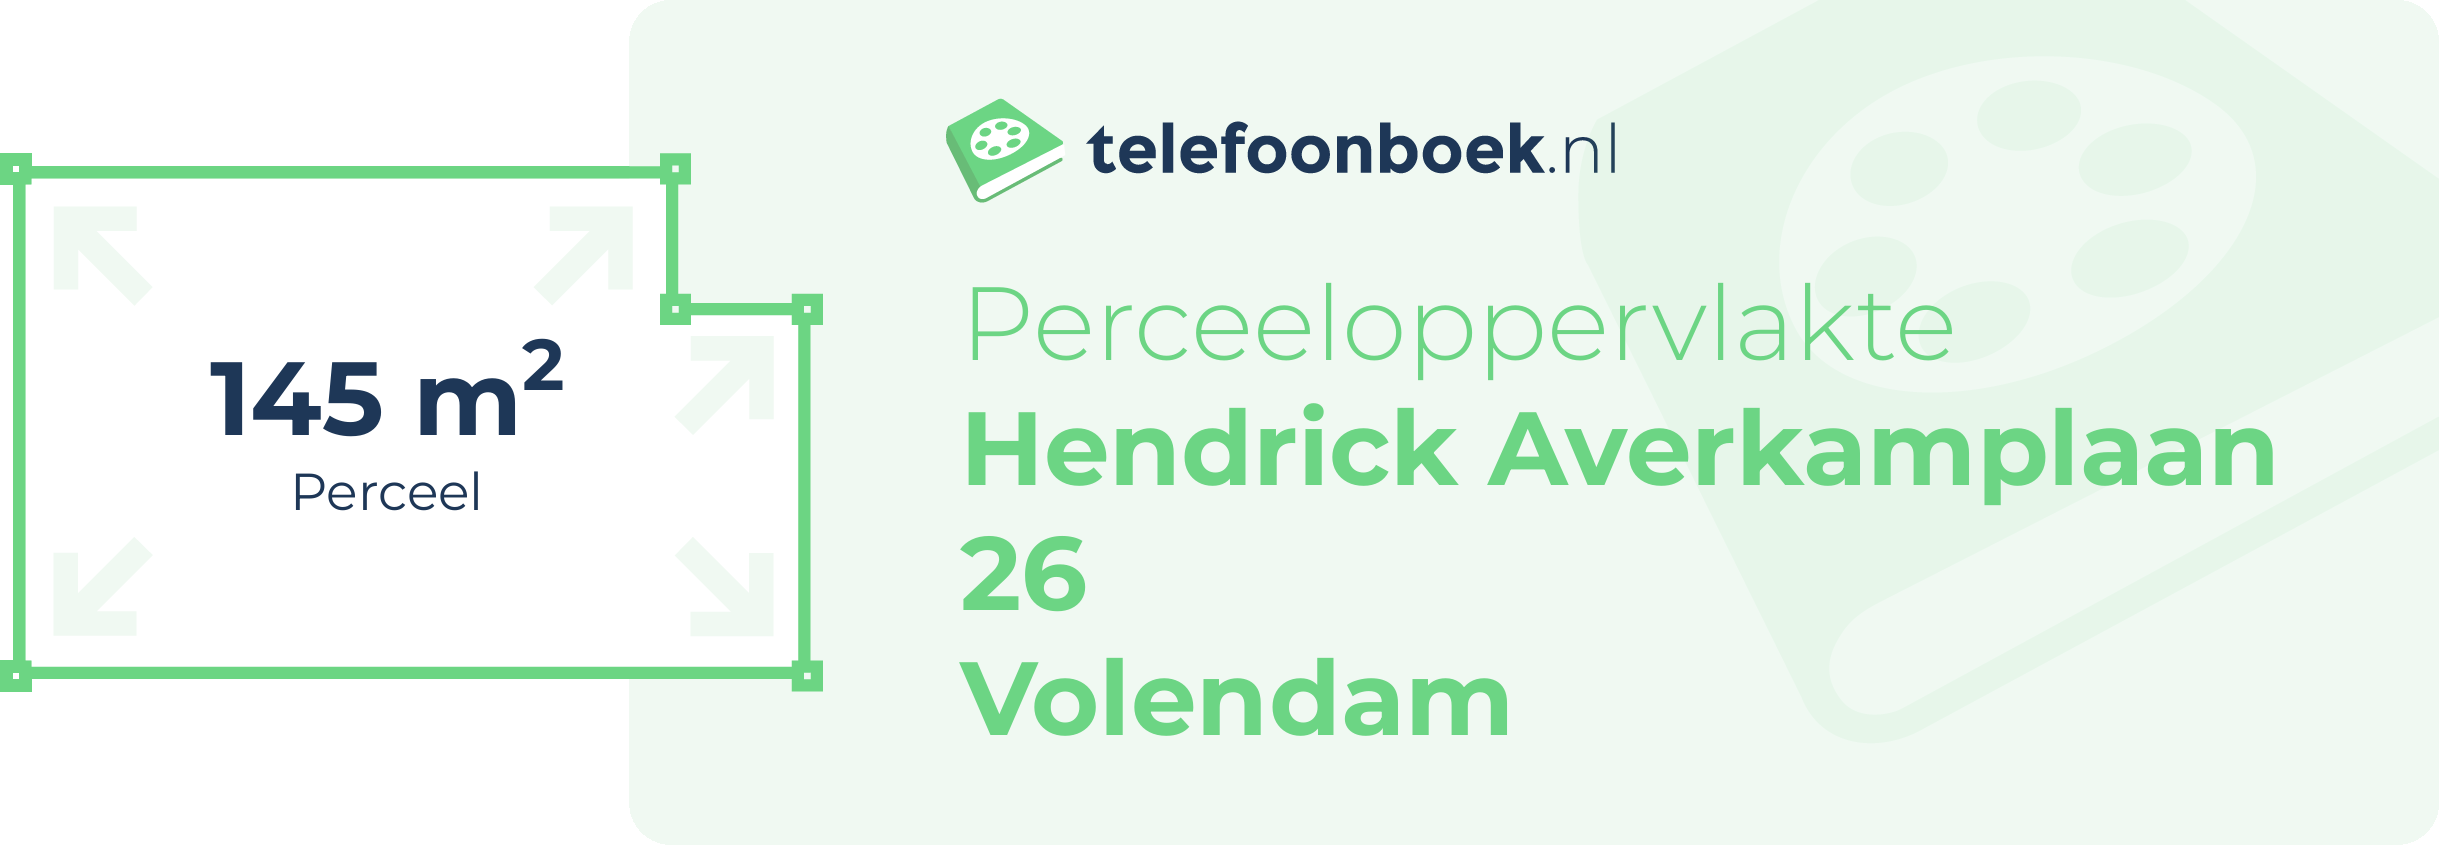 Perceeloppervlakte Hendrick Averkamplaan 26 Volendam